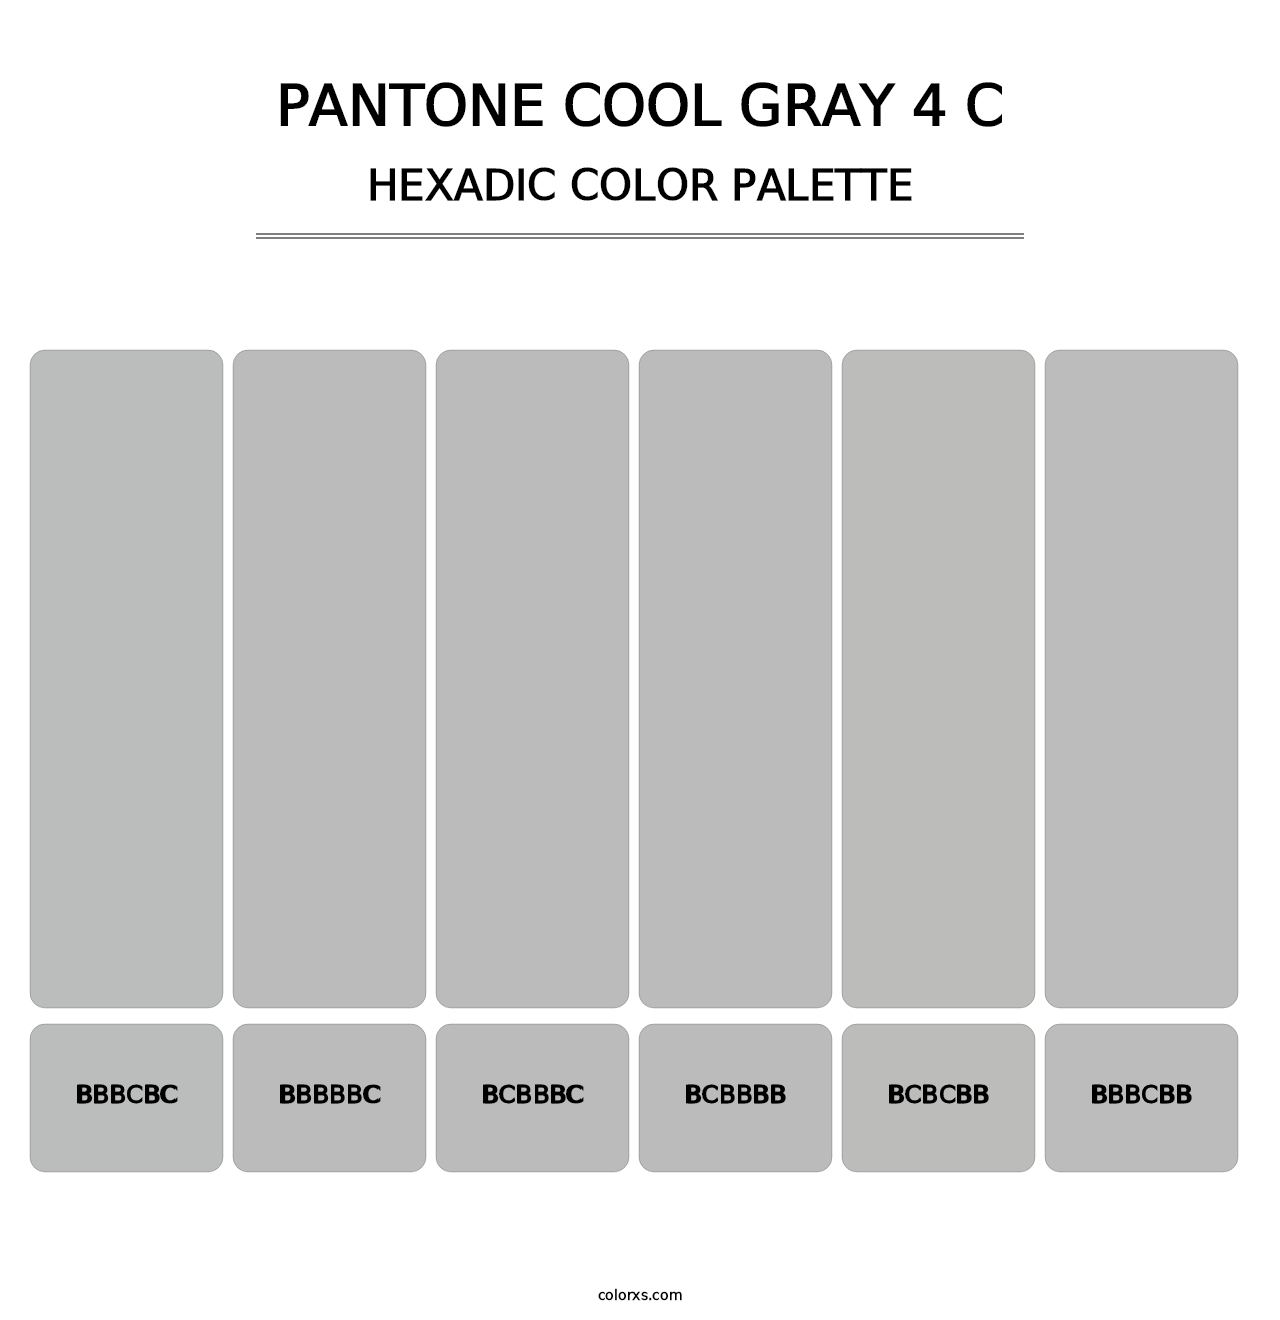 PANTONE Cool Gray 4 C - Hexadic Color Palette